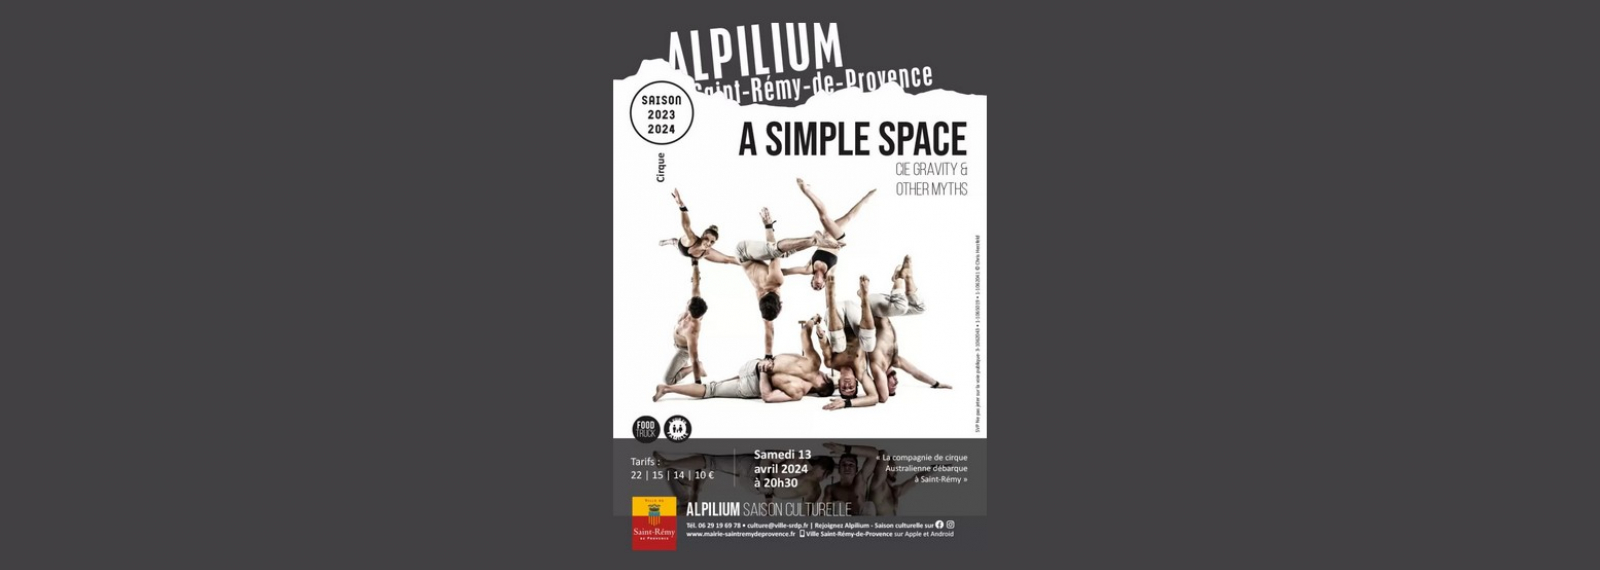 Alpilium : A simple space